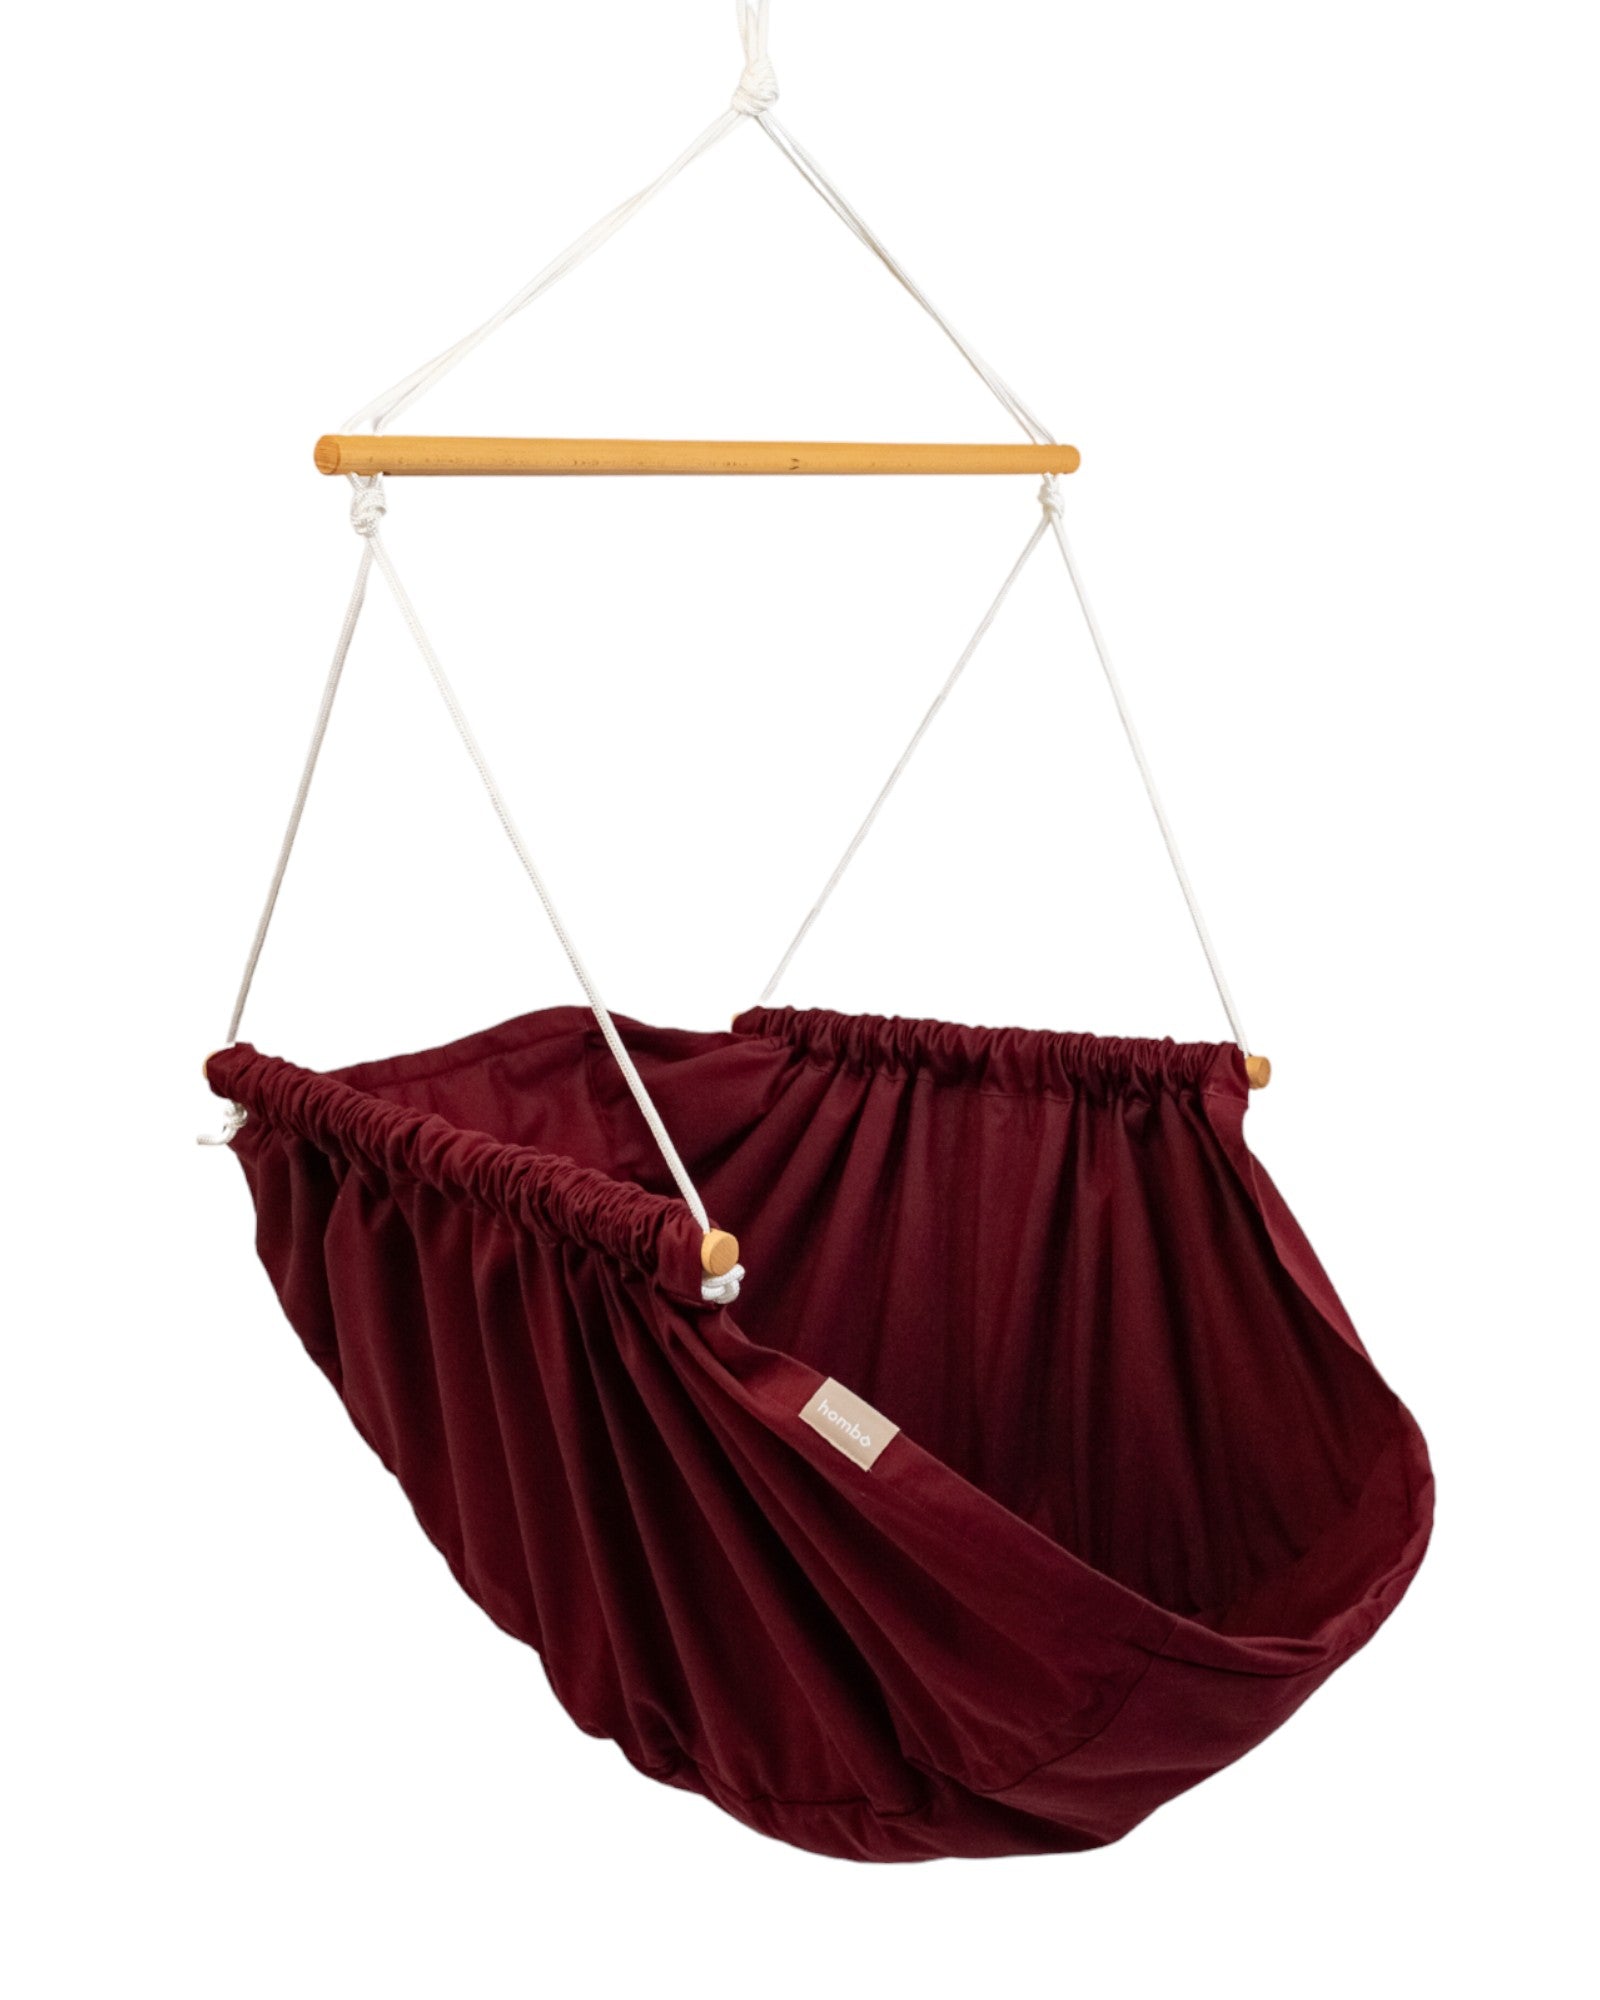 homba® zen hanging chair cotton burgundy